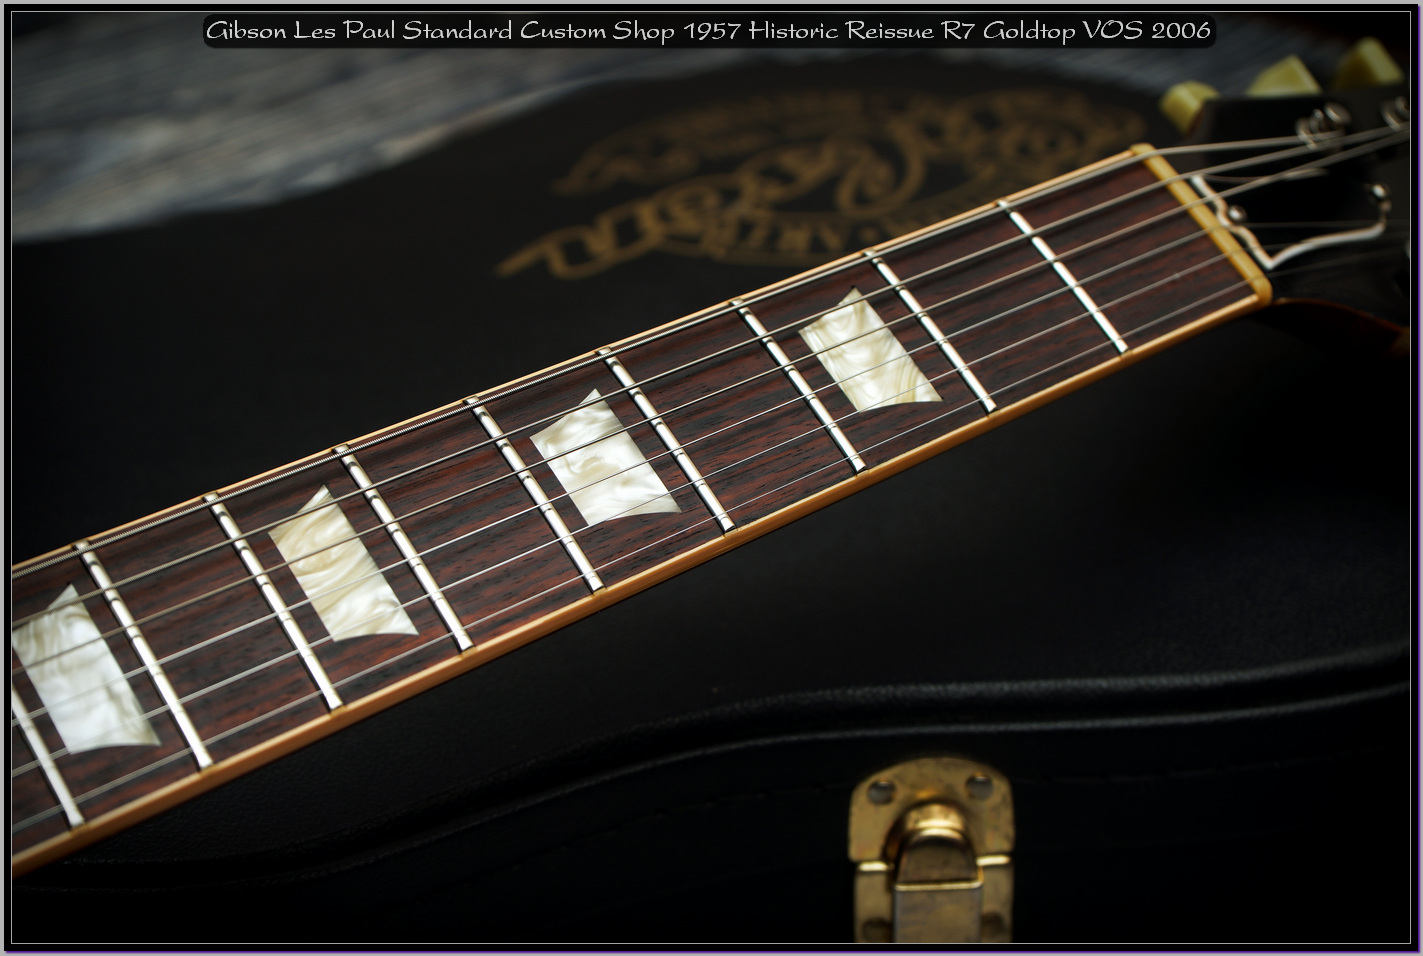 Gibson Les Paul Standard Custom Shop 1957 Historic Reissue R7 Goldtop VOS 2006 07_x1400.jpg